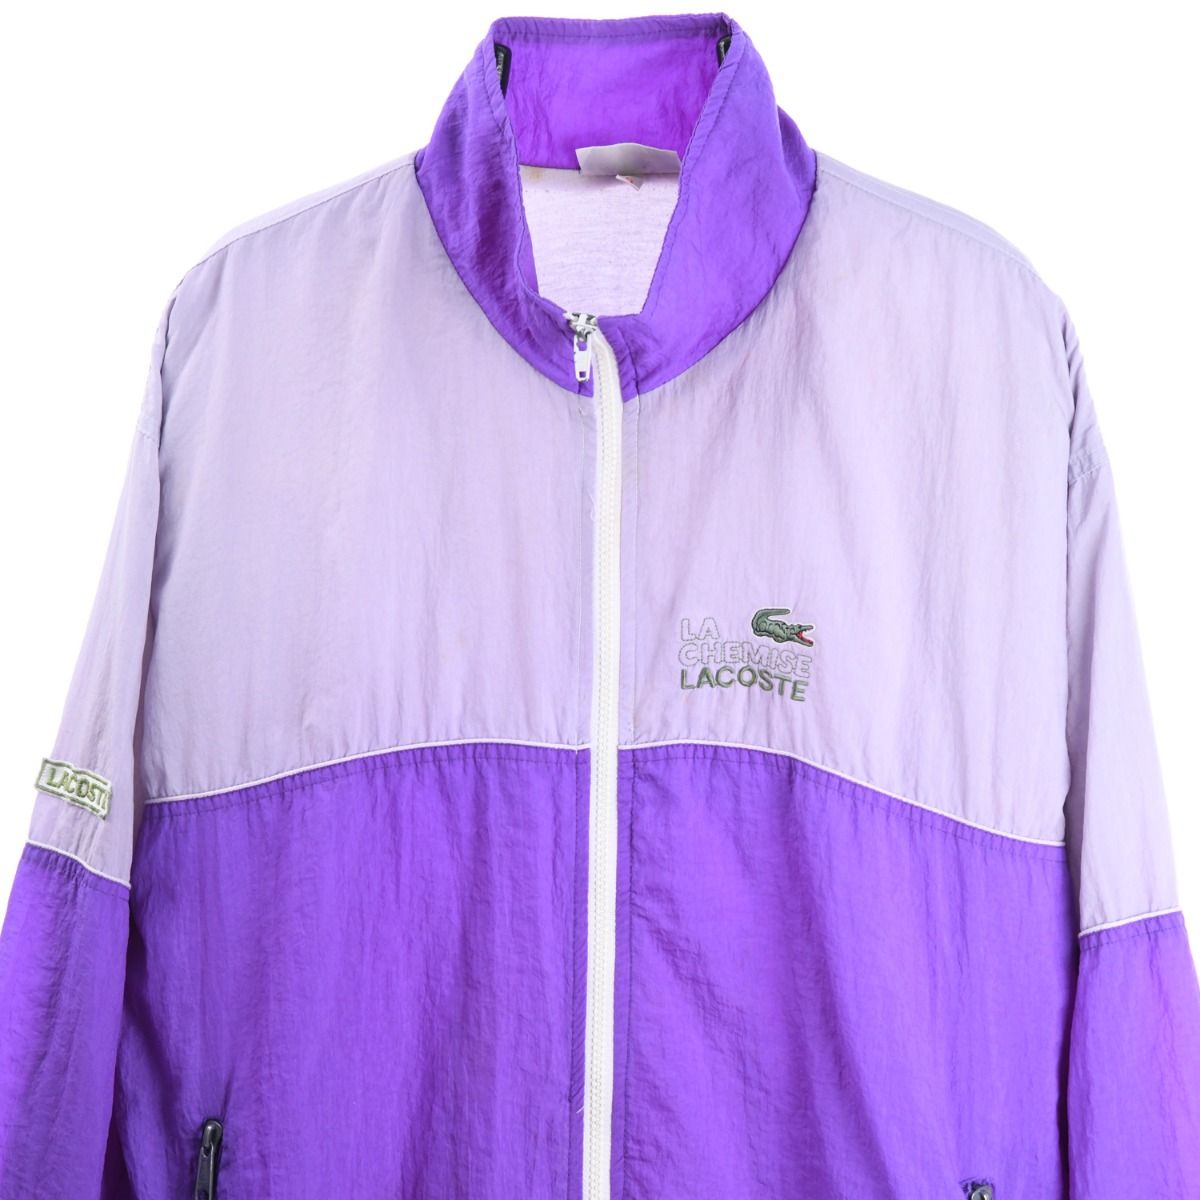 Lacoste 1990s Track Jacket